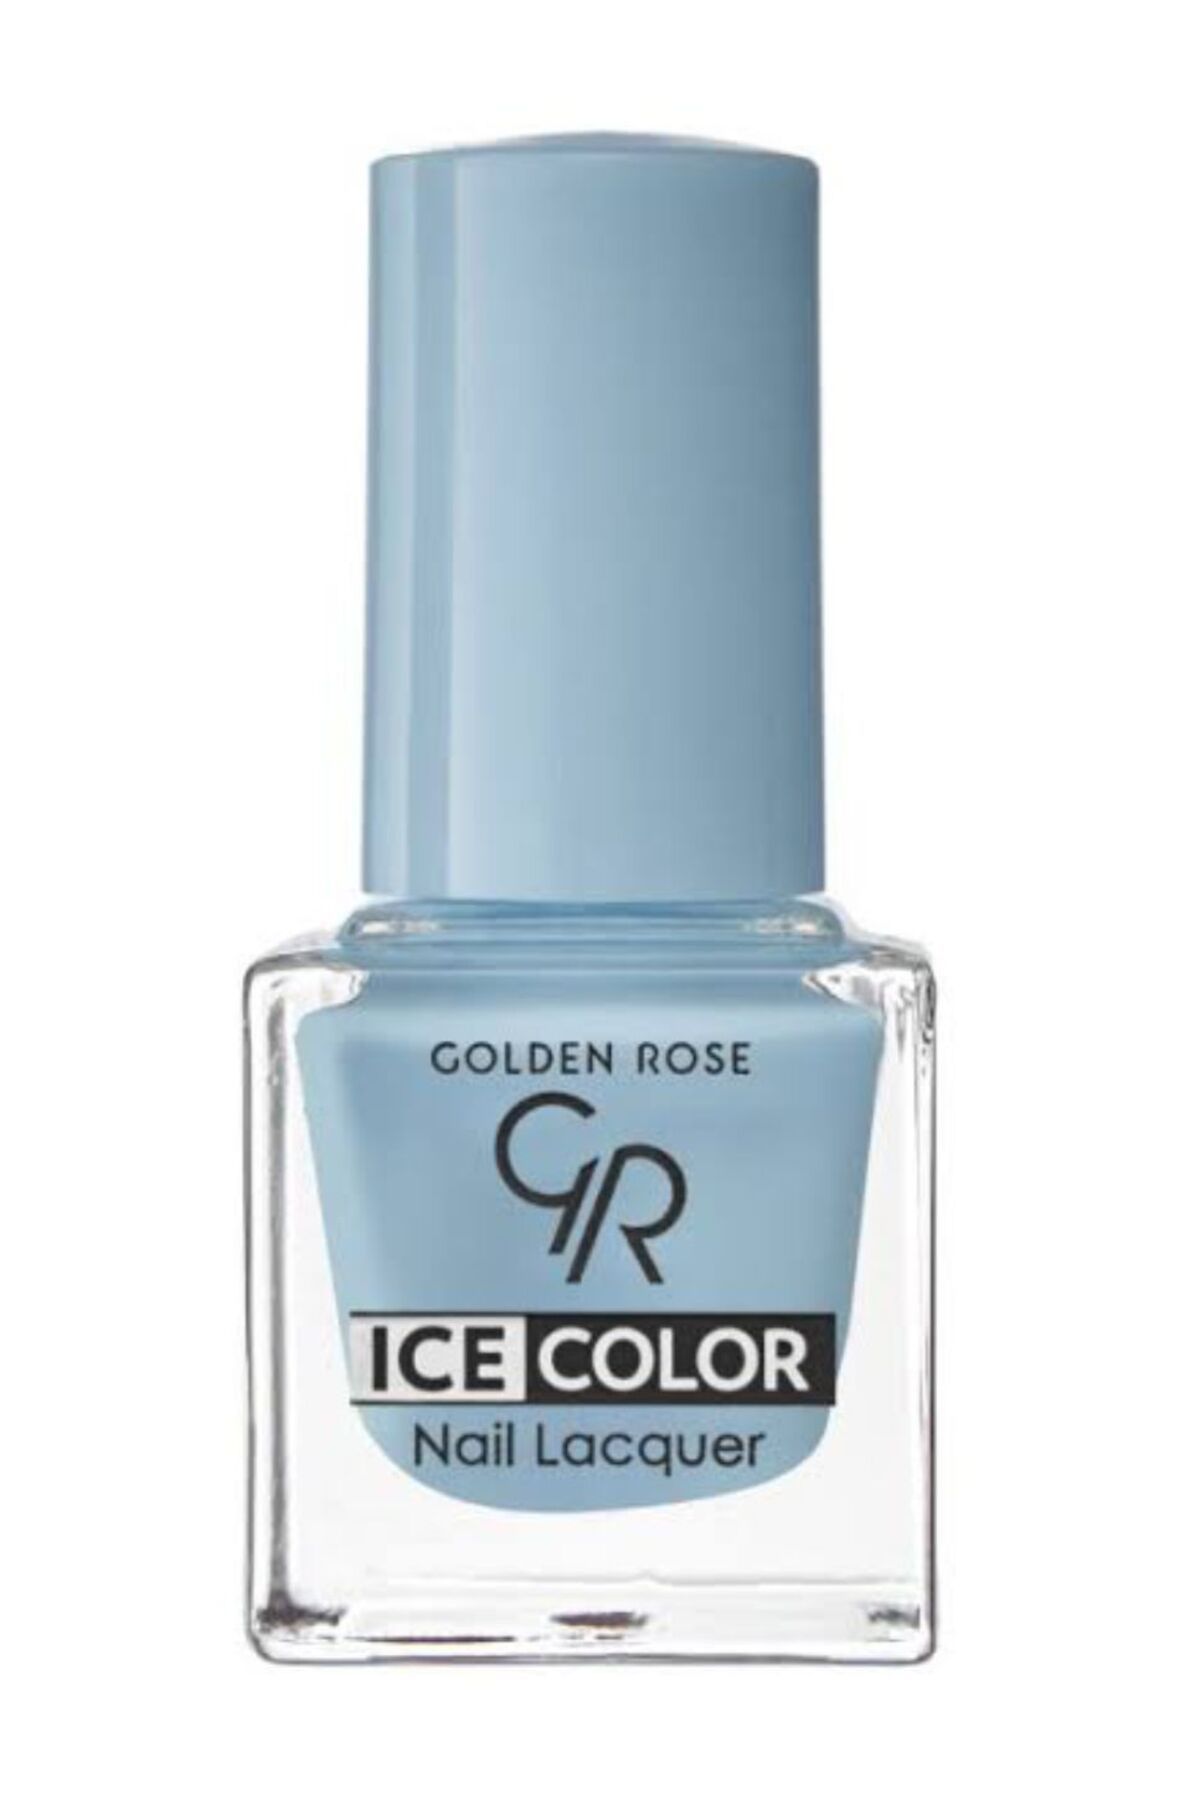 Golden Rose Ice Color Nail Lacquer - Mini Oje